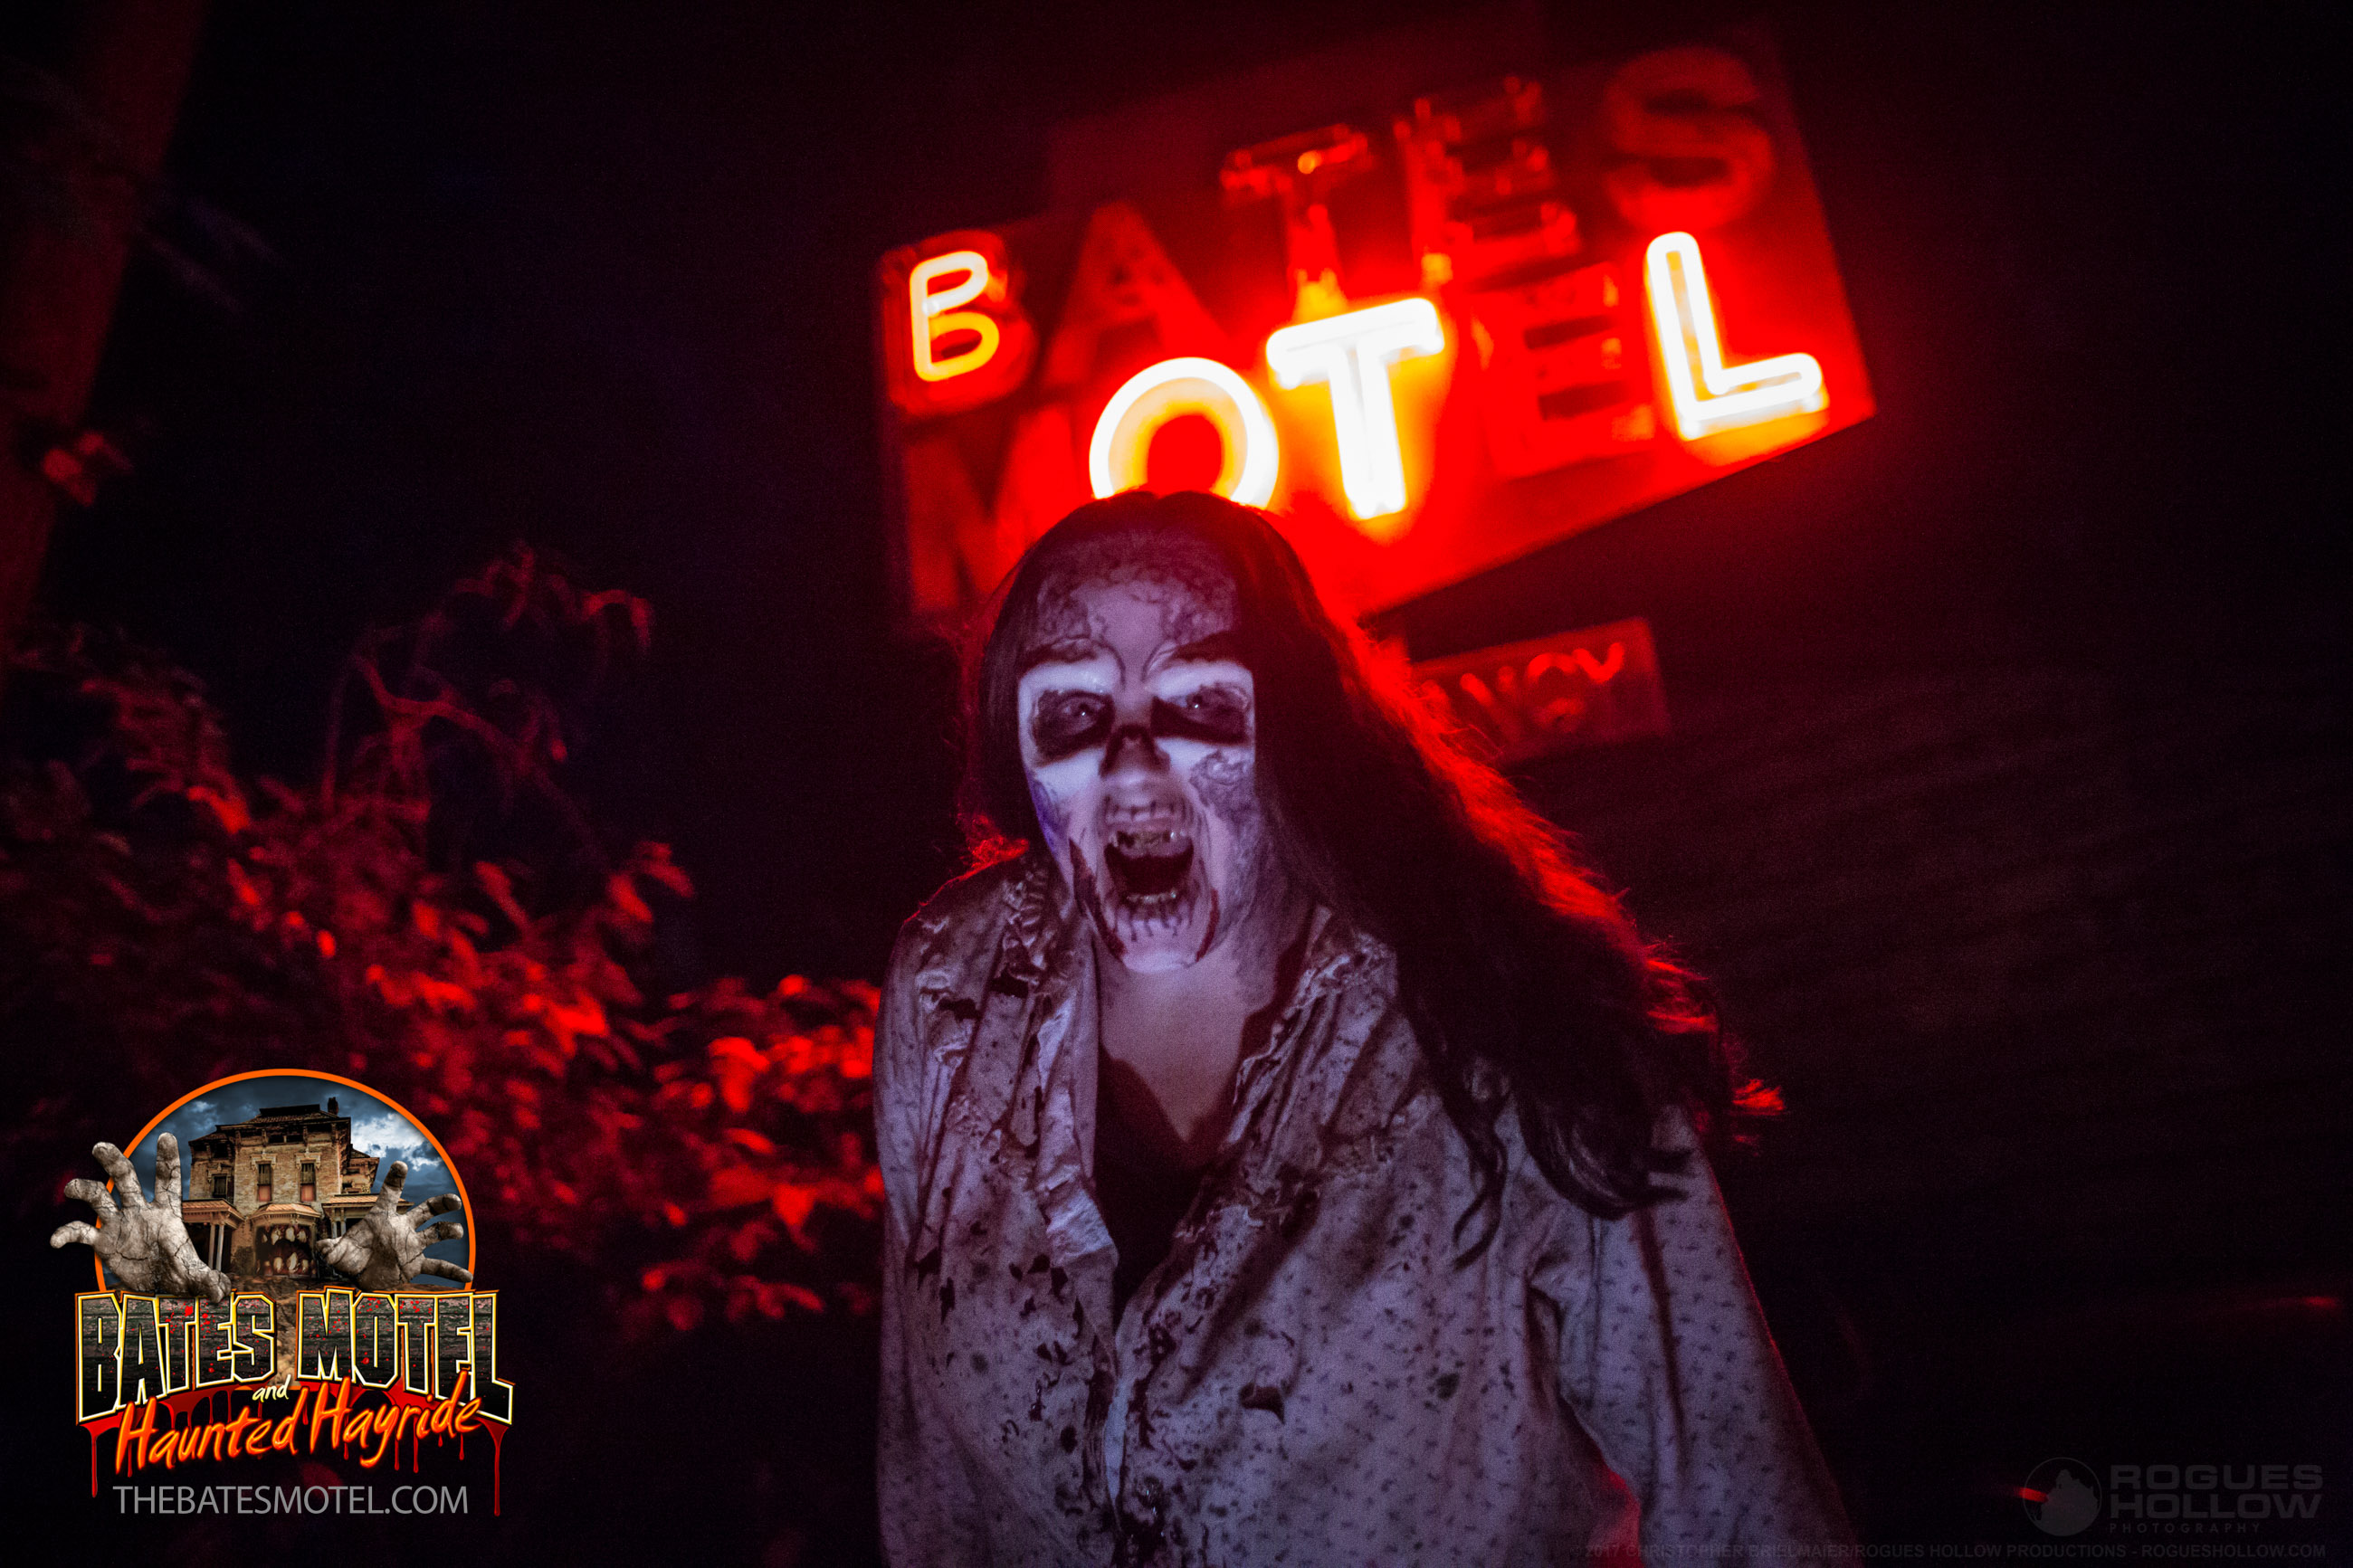 Bates Motel Haunted Hayride Halloween Attraction PA